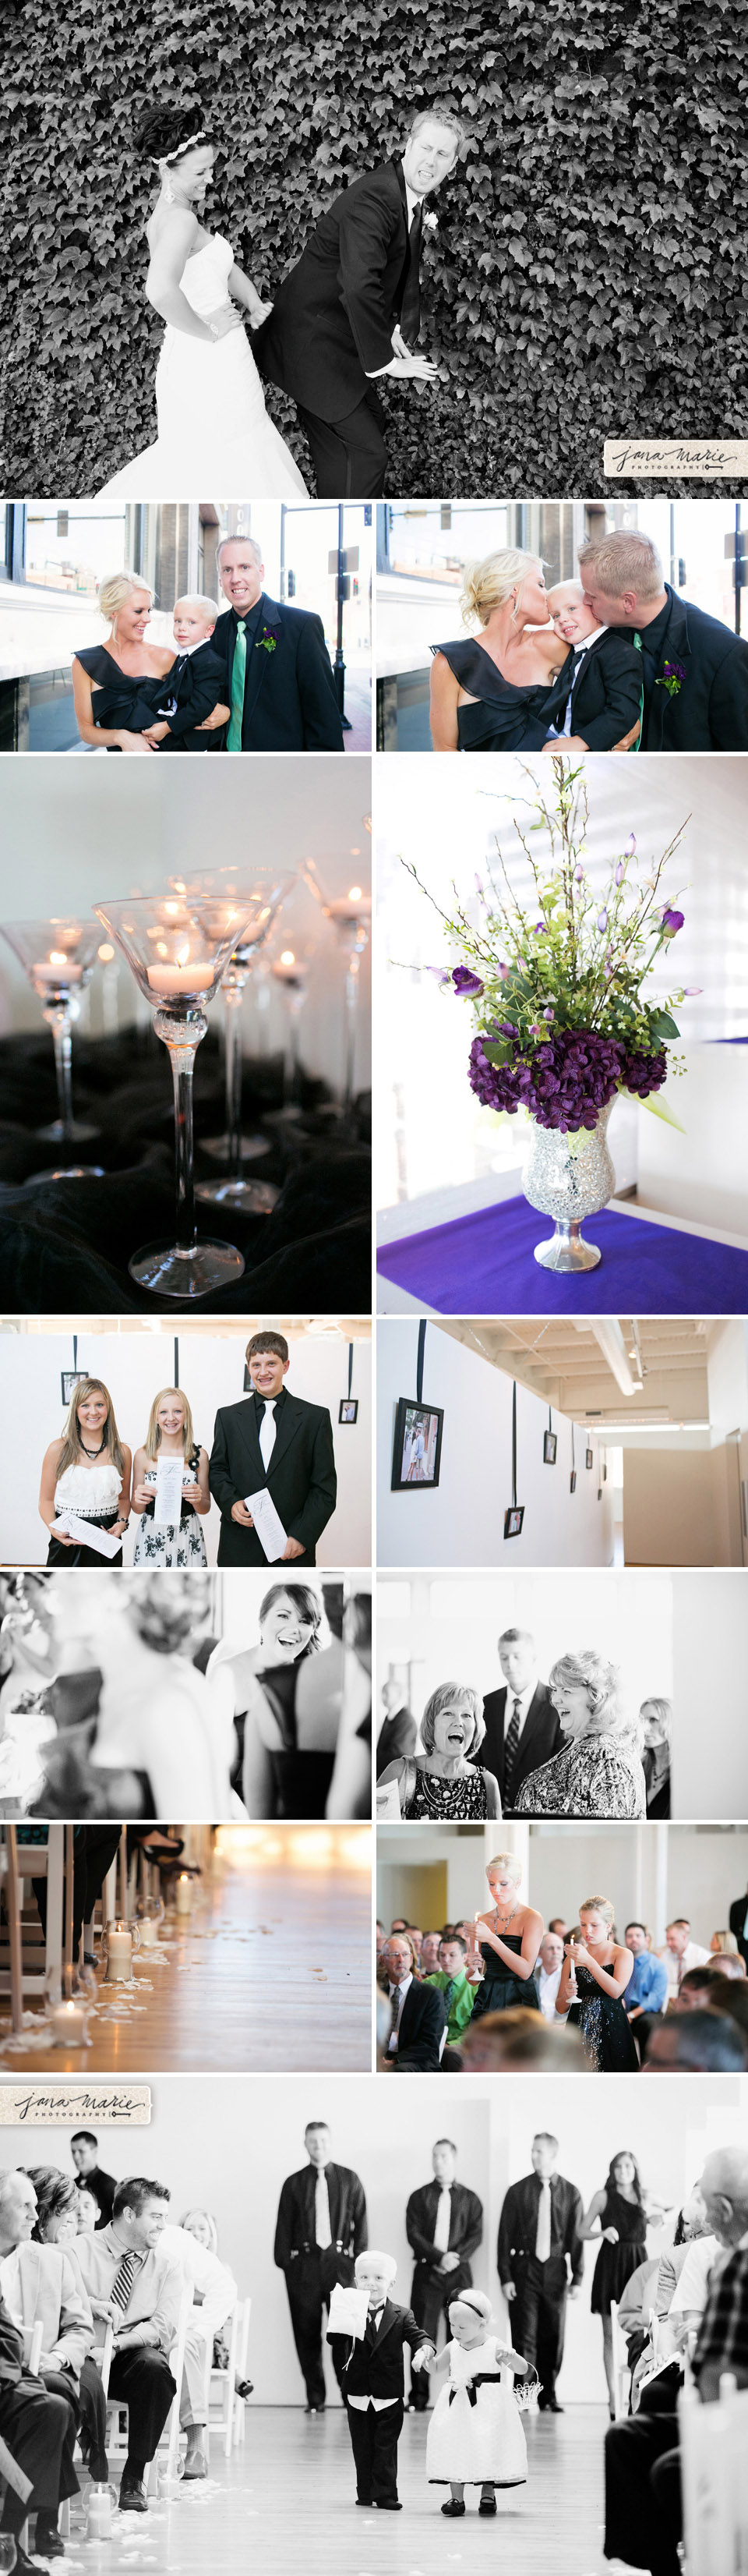 Details, wedding decor, candle light, Purple and green flowers, Club 1000 ceremony, Jana Marler